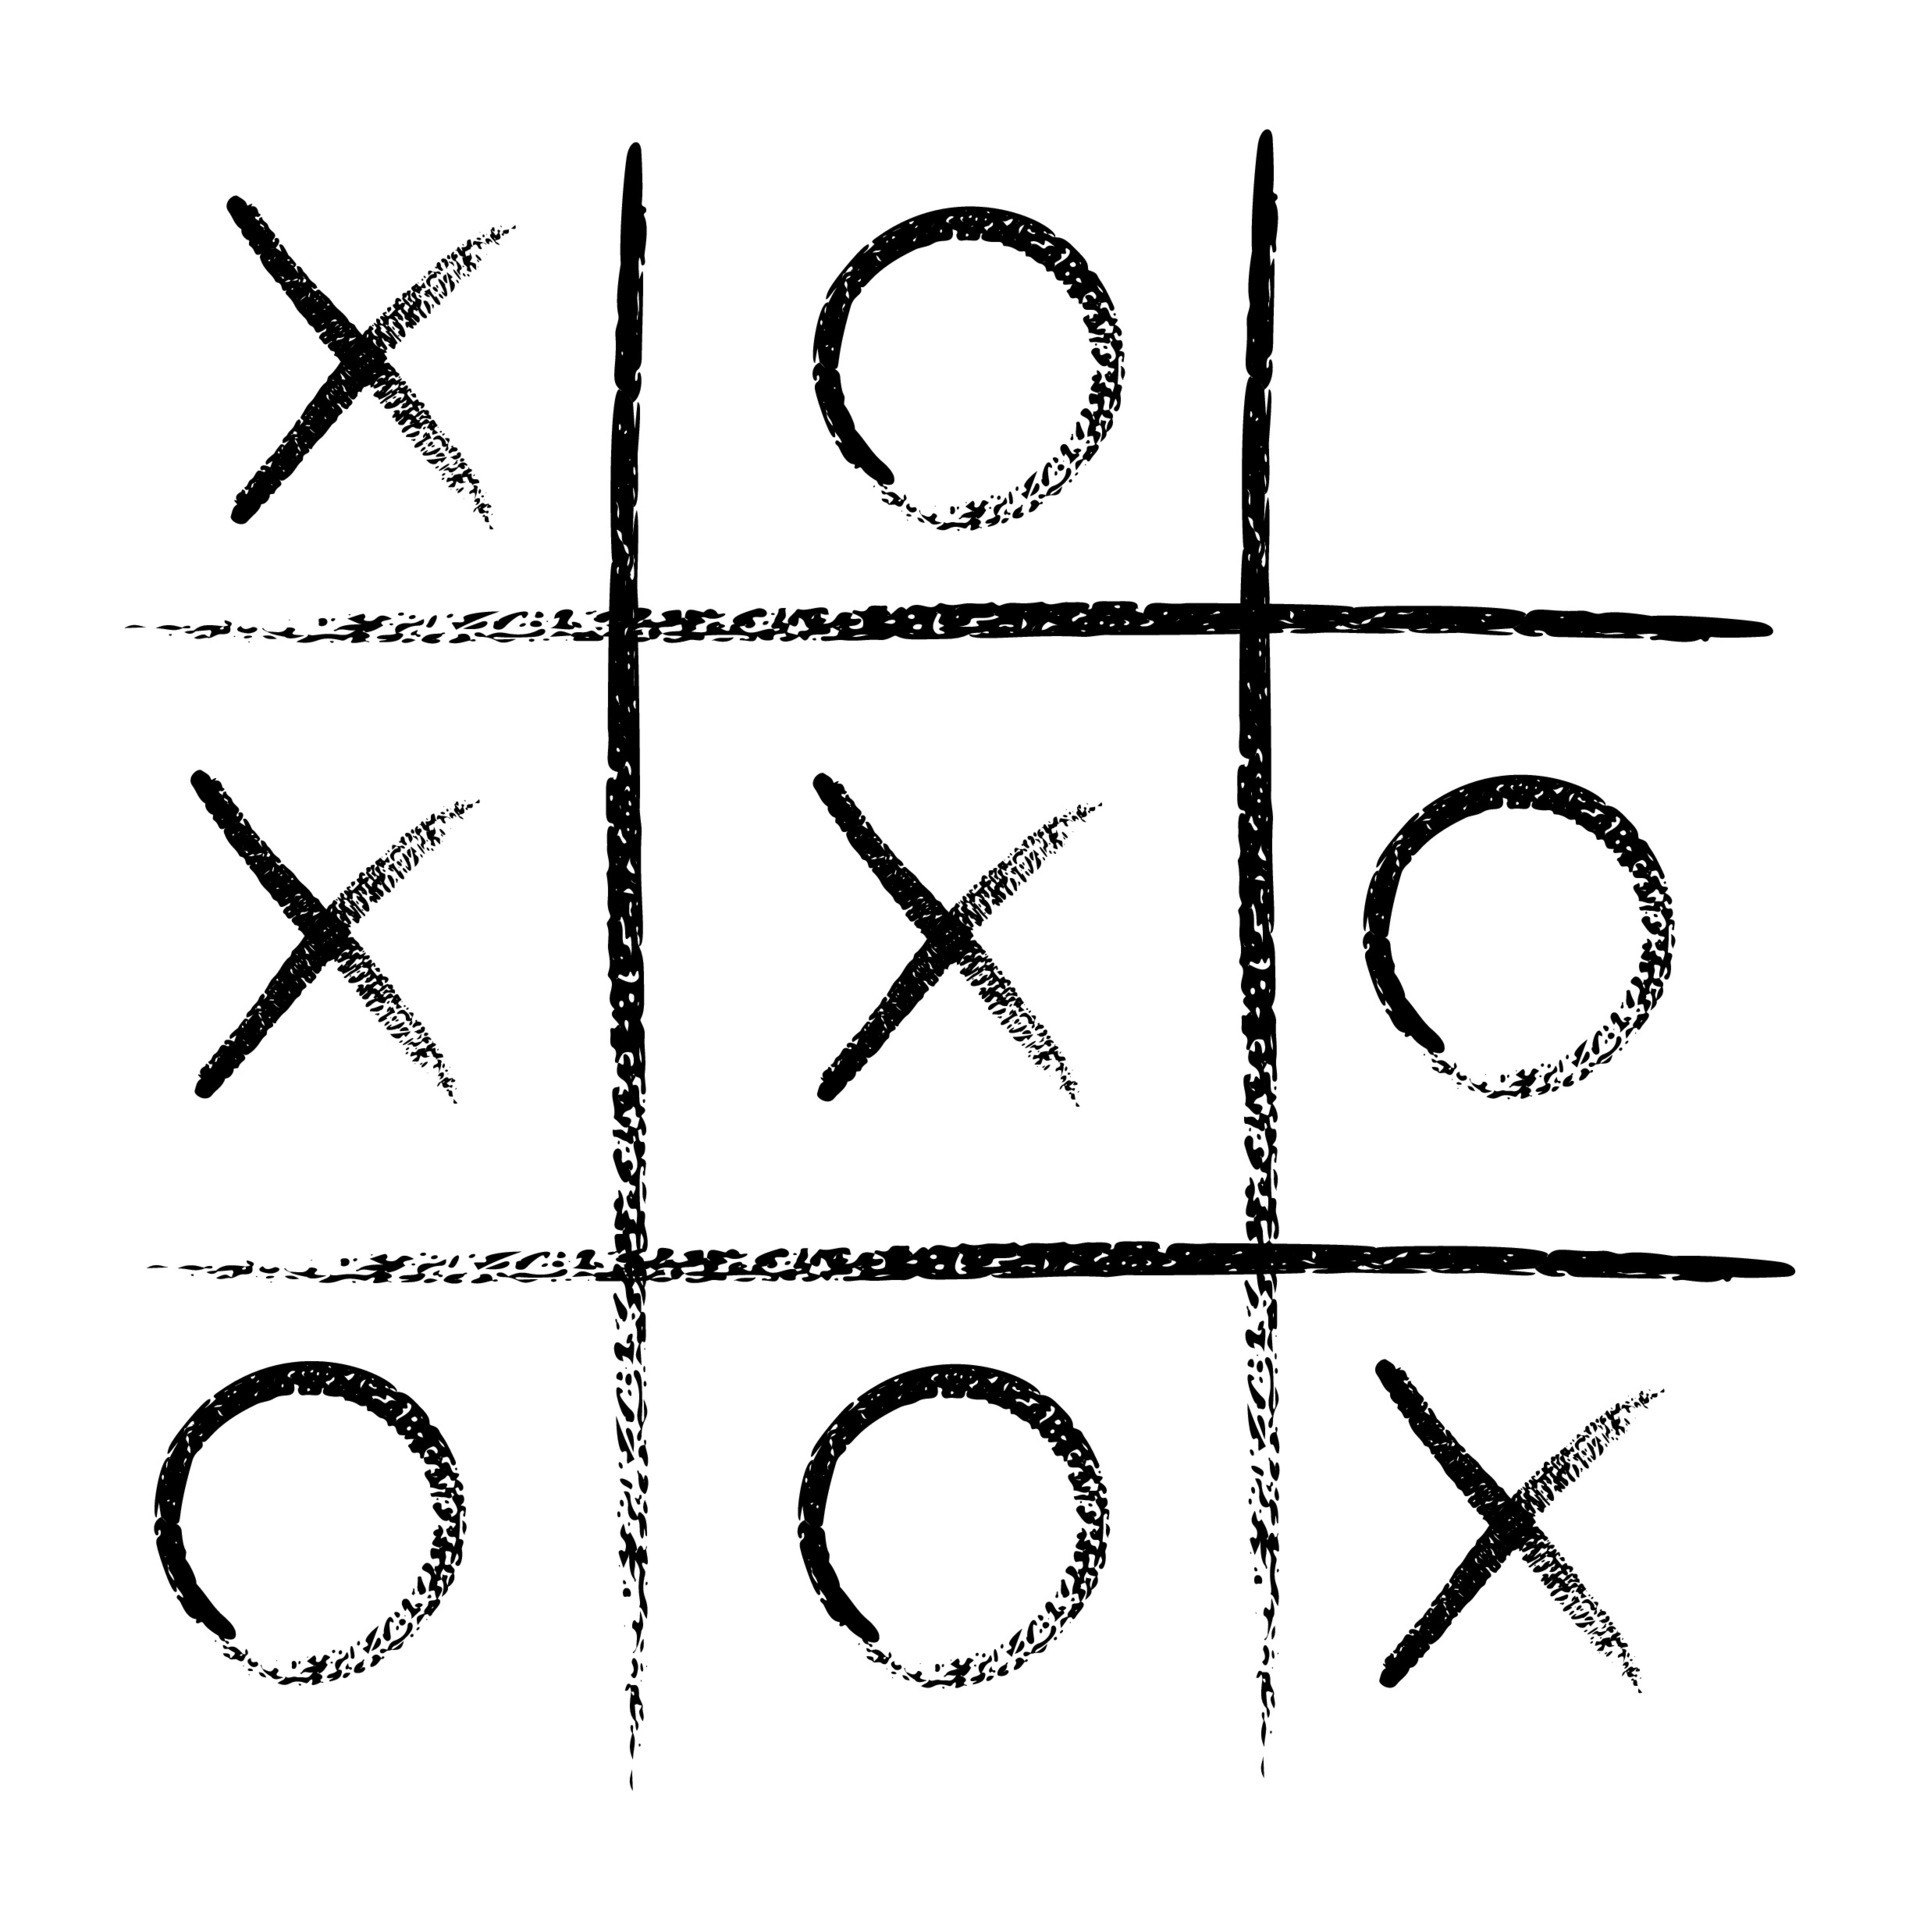 Hand Drawn Tic-tac-toe Elements. Grid Game, Cross, Toe. Strategy